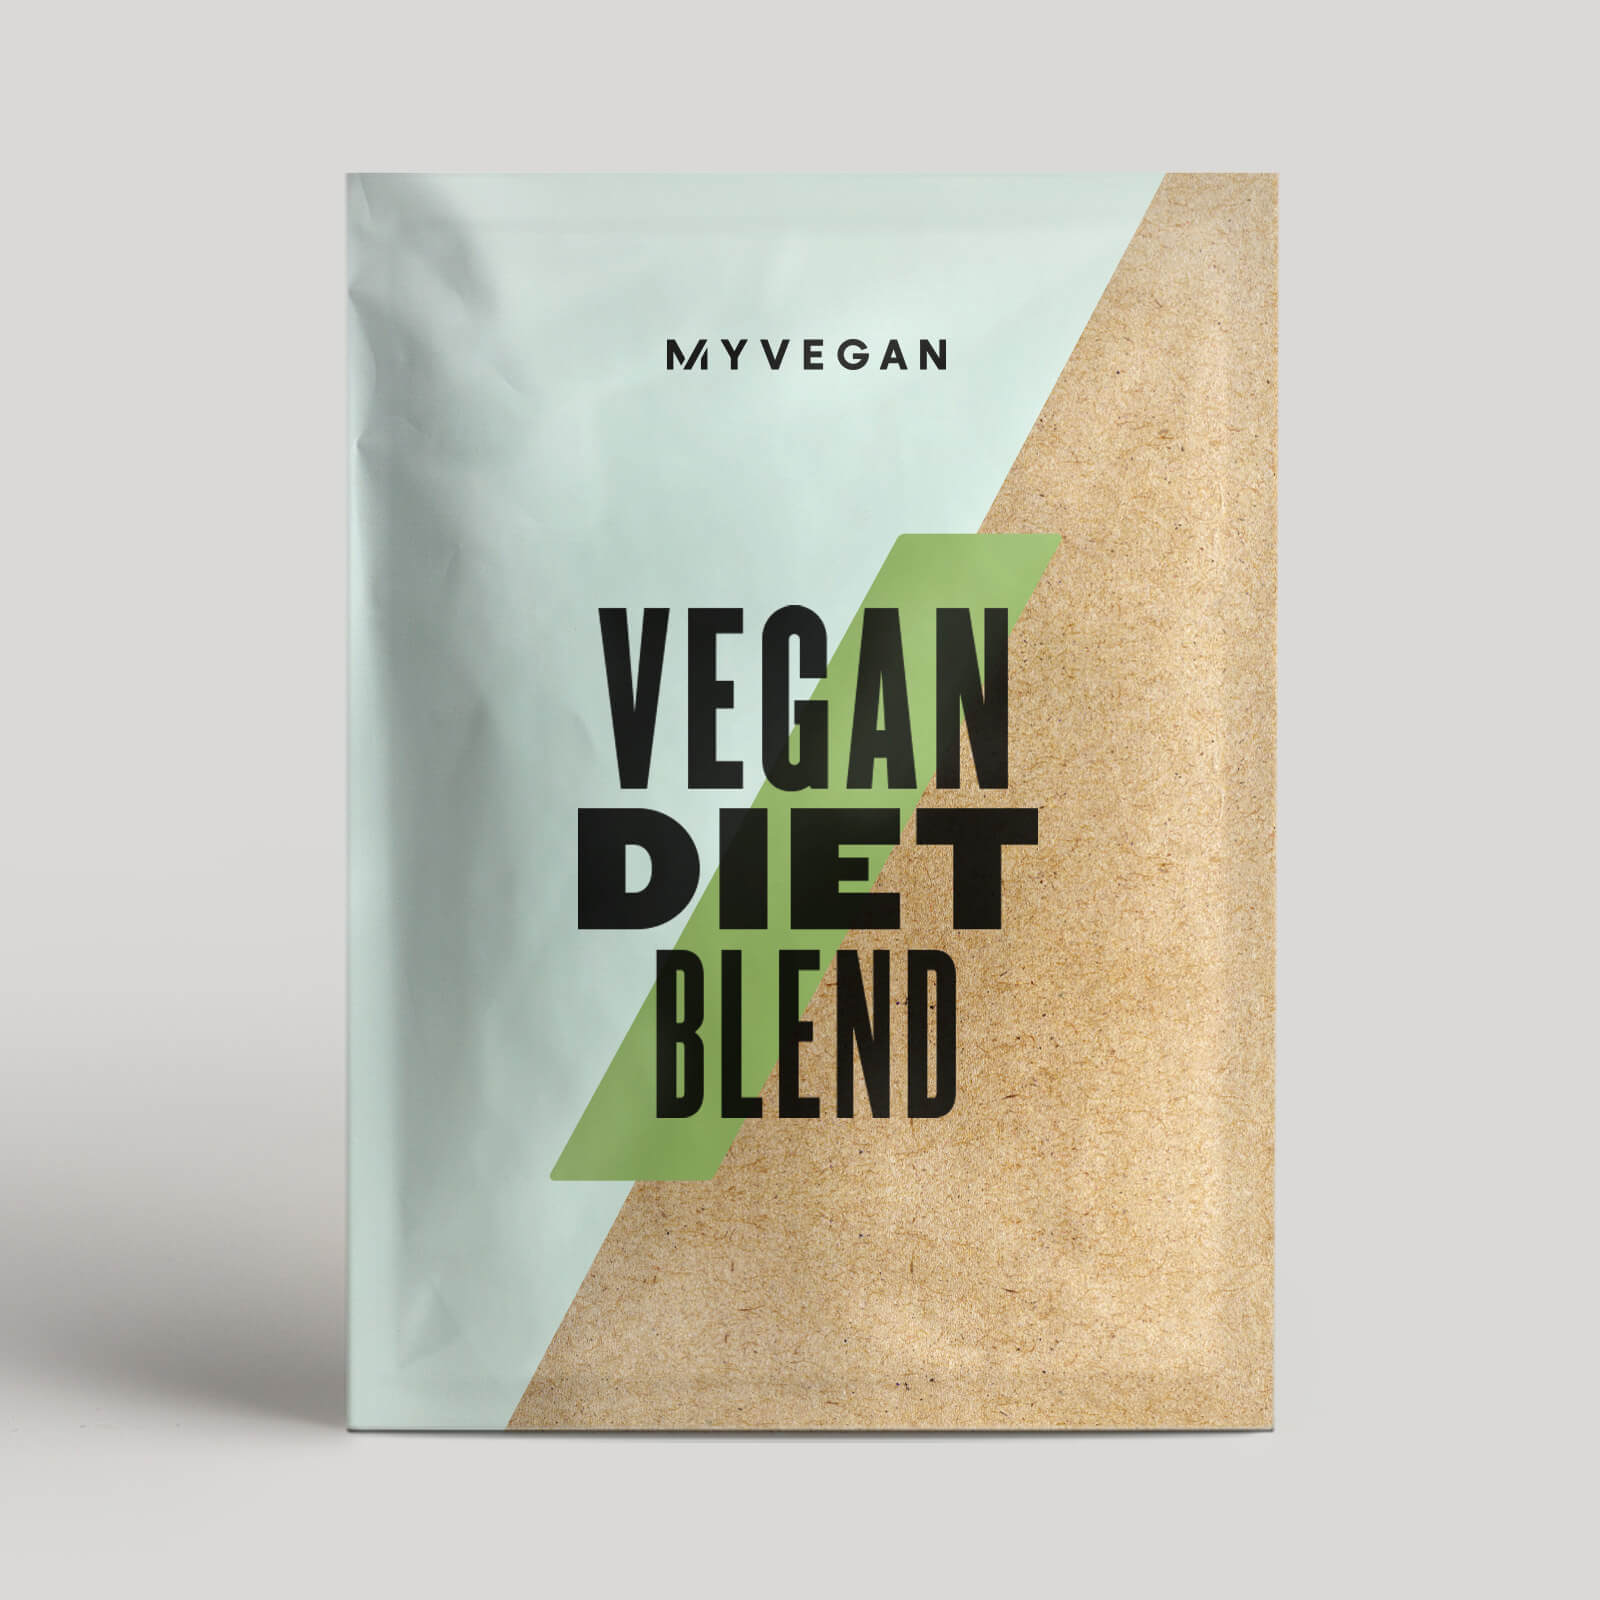 Myvegan Vegan Diet Blend (Sample) - 17g - White Chocolate Raspberry